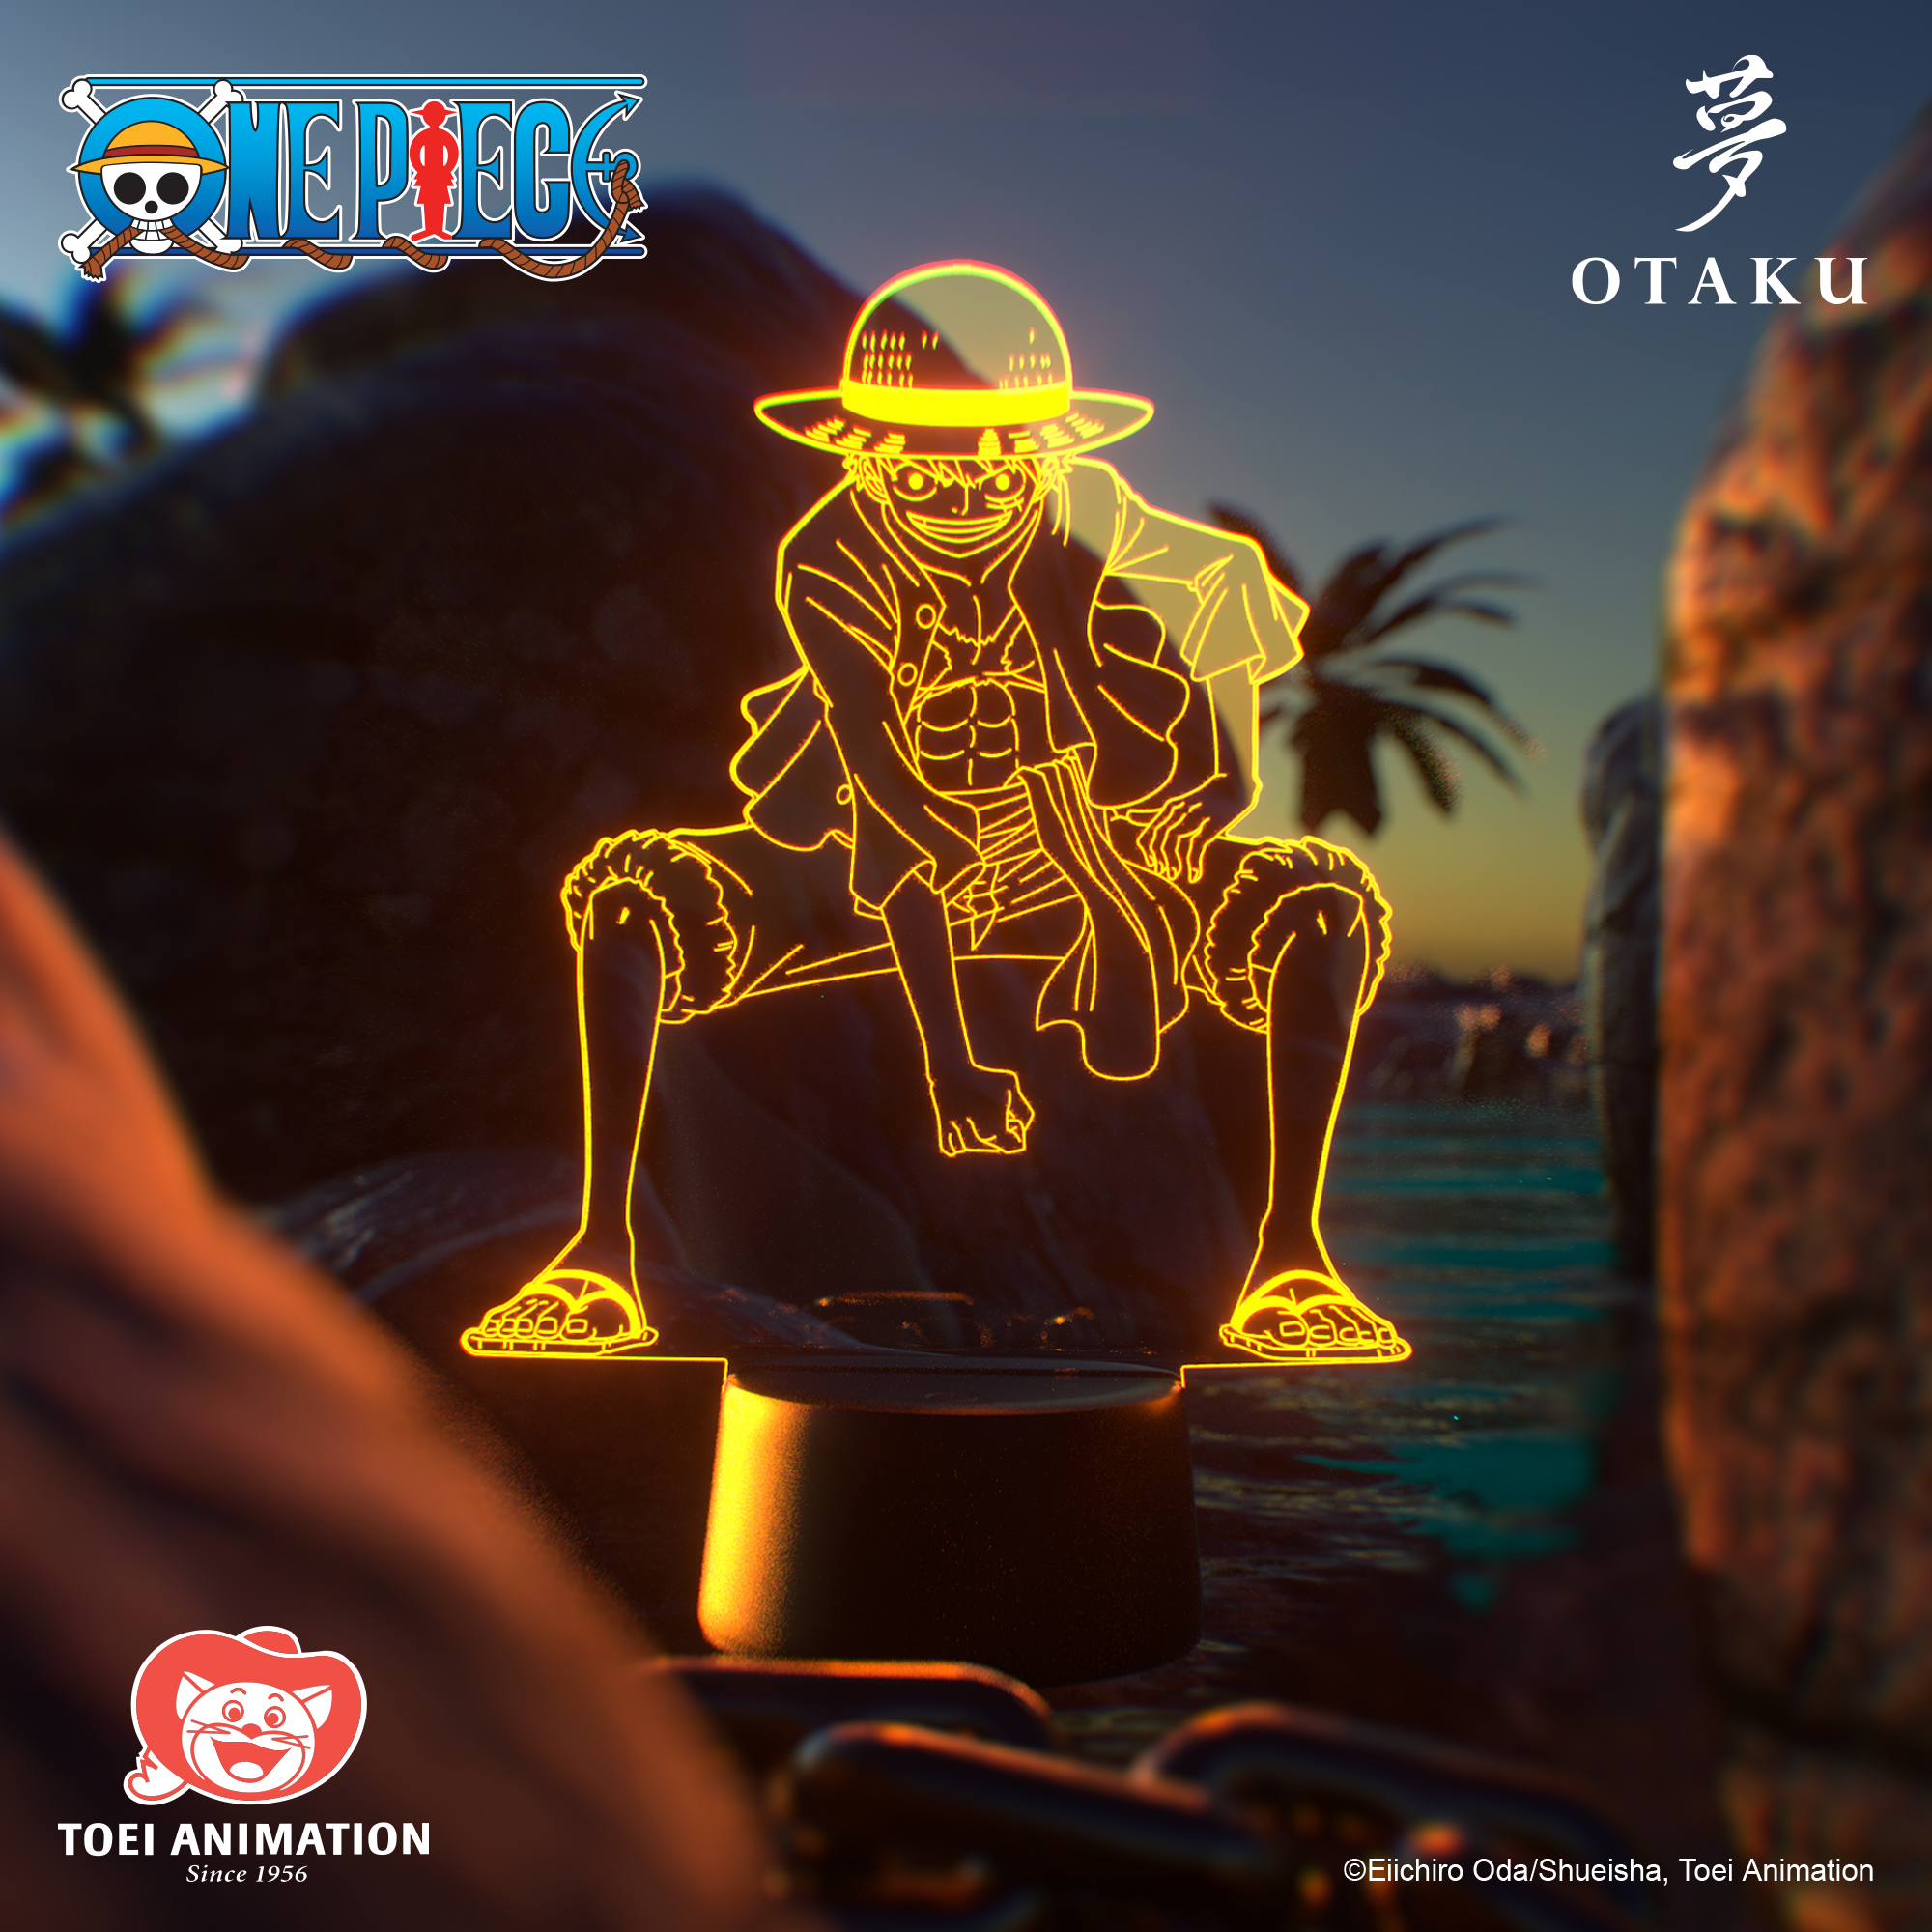 OTAKU LAMPS TEAMS UP WITH TOEI ANIMATION